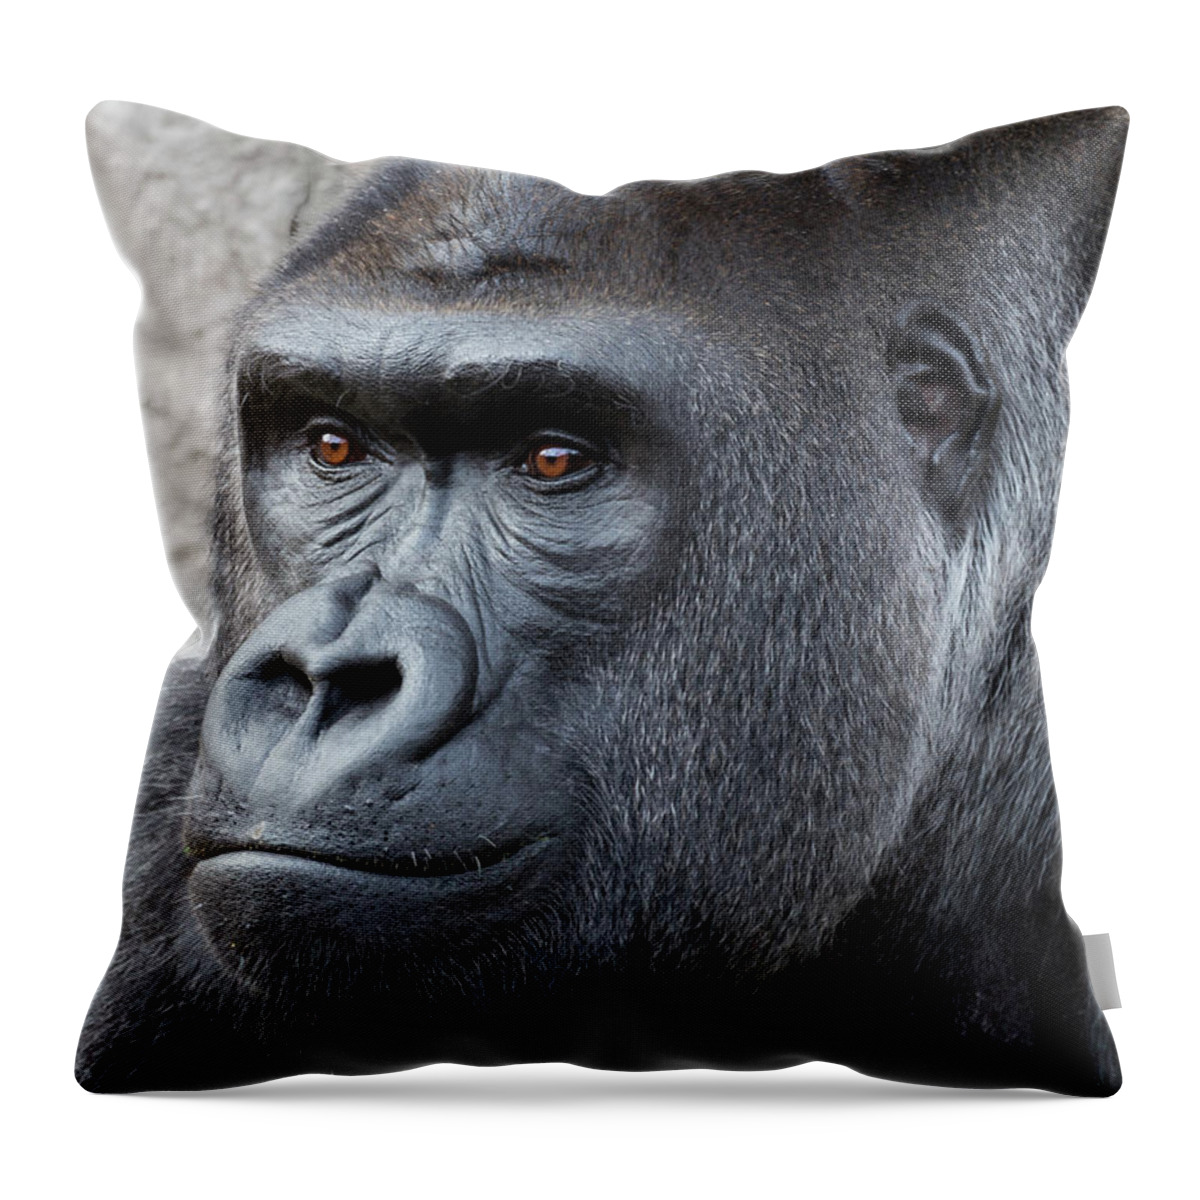 Gorillas in the Mist Throw Pillow by Robert Bellomy - Robert Bellomy -  Artist Website